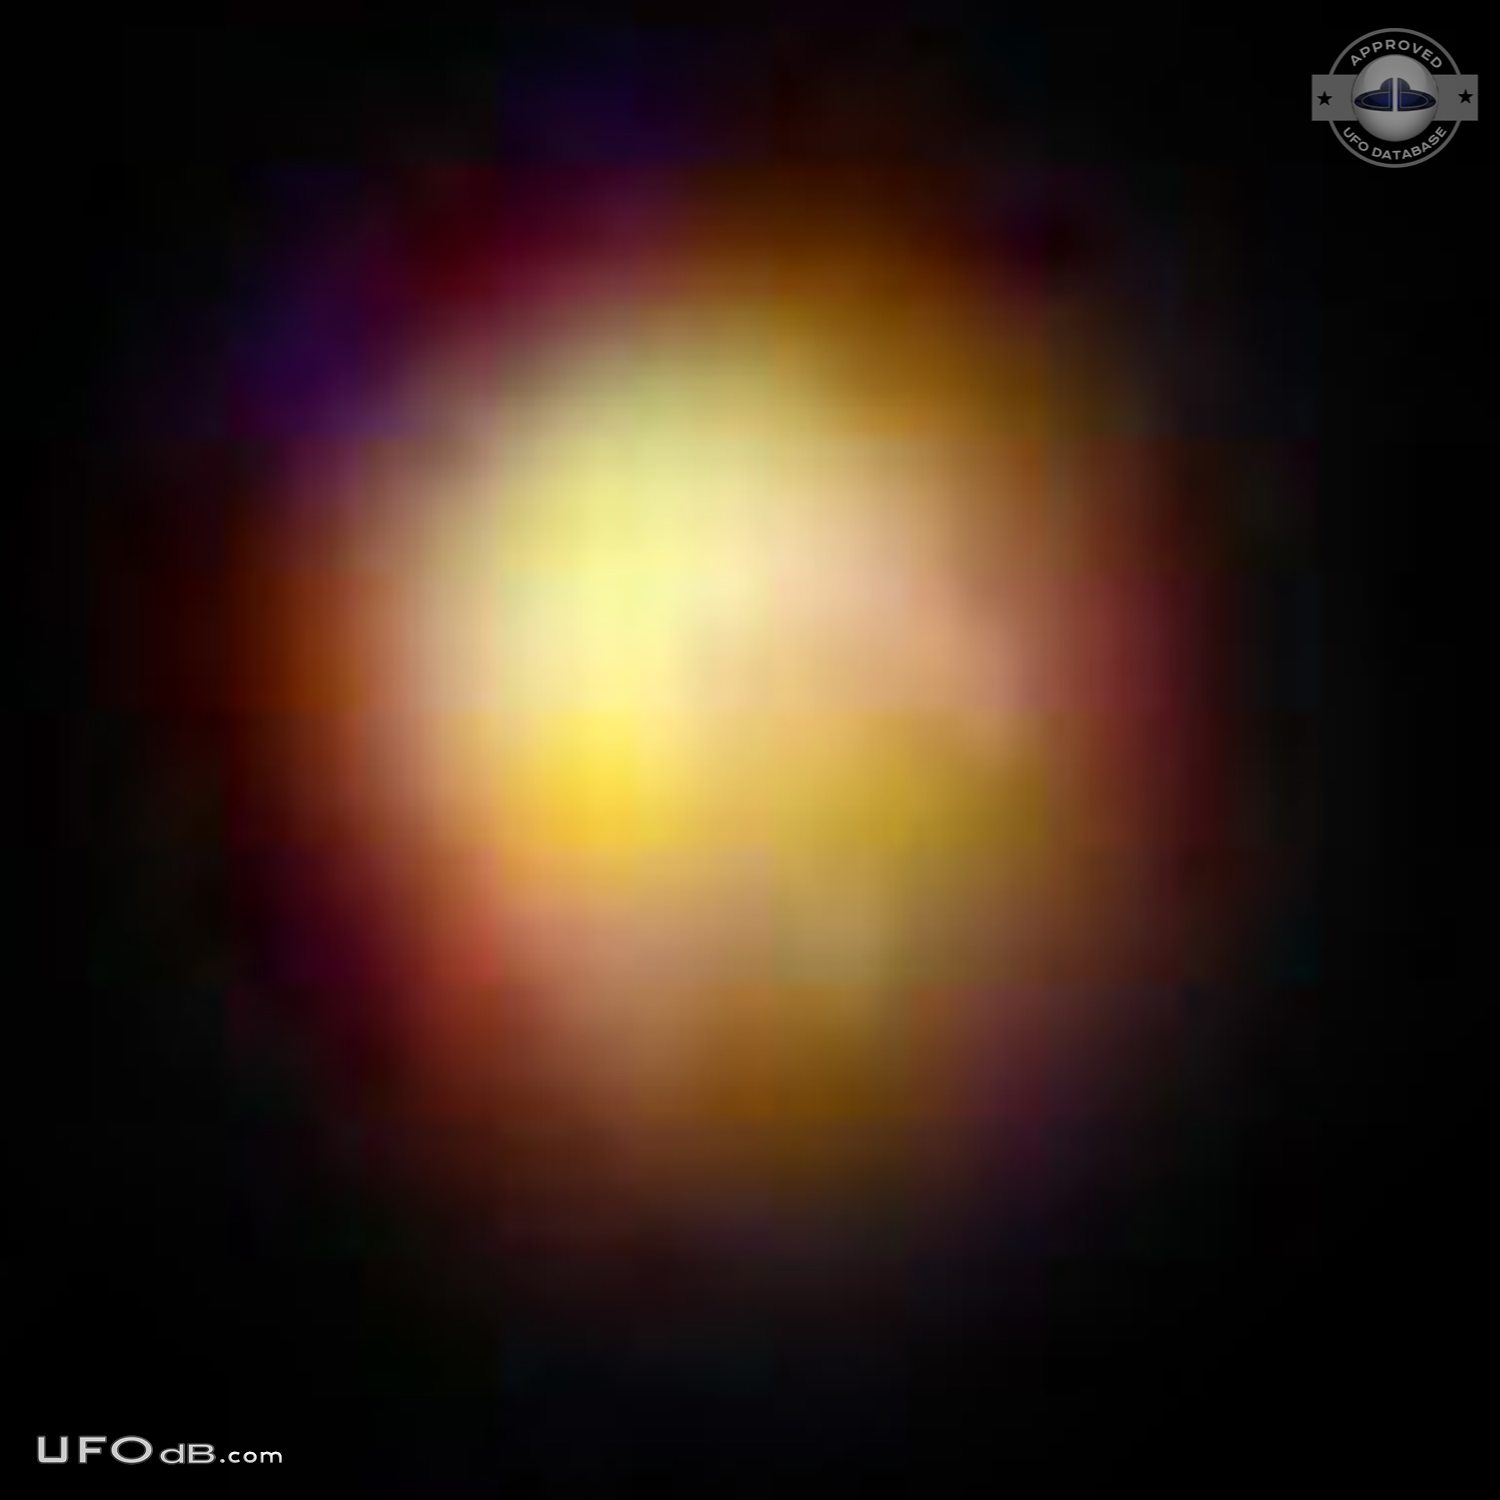 Orange Orb UFOs seen over Saint Petersburg Florida USA 2015 UFO Picture #643-7